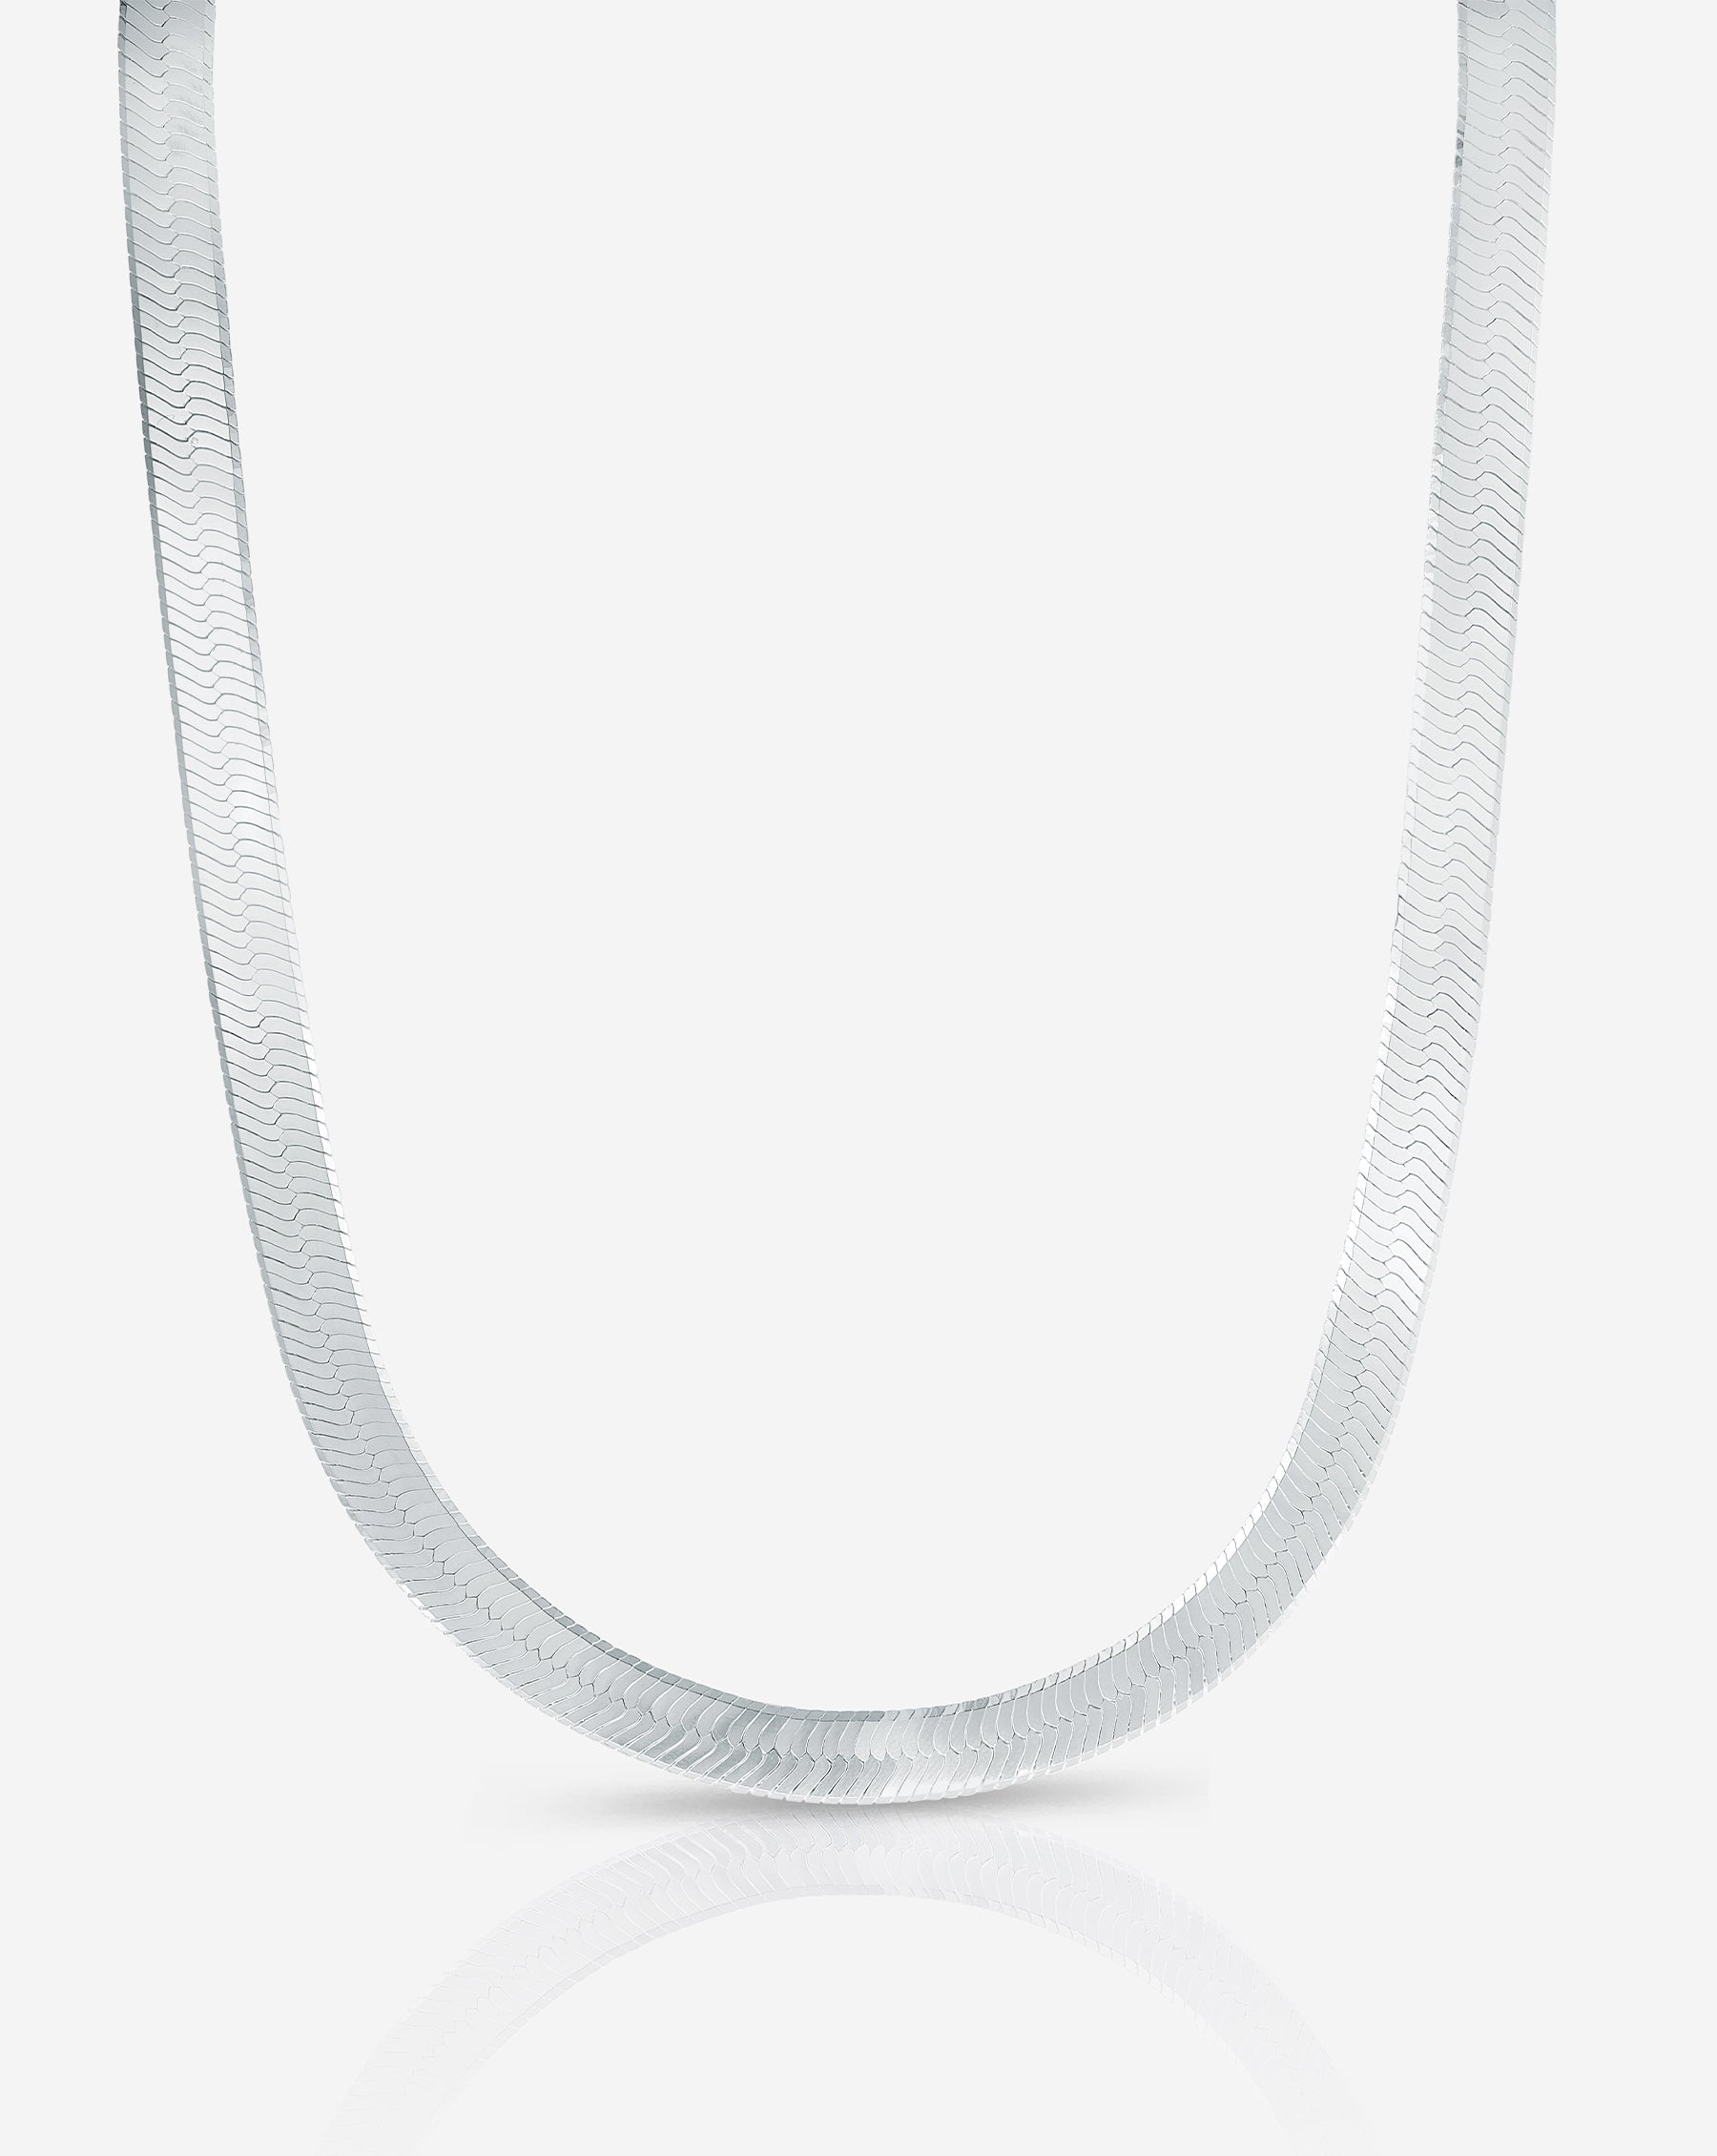 Kay Diamond-Cut Herringbone Chain Necklace 7.1mm Sterling Silver 20